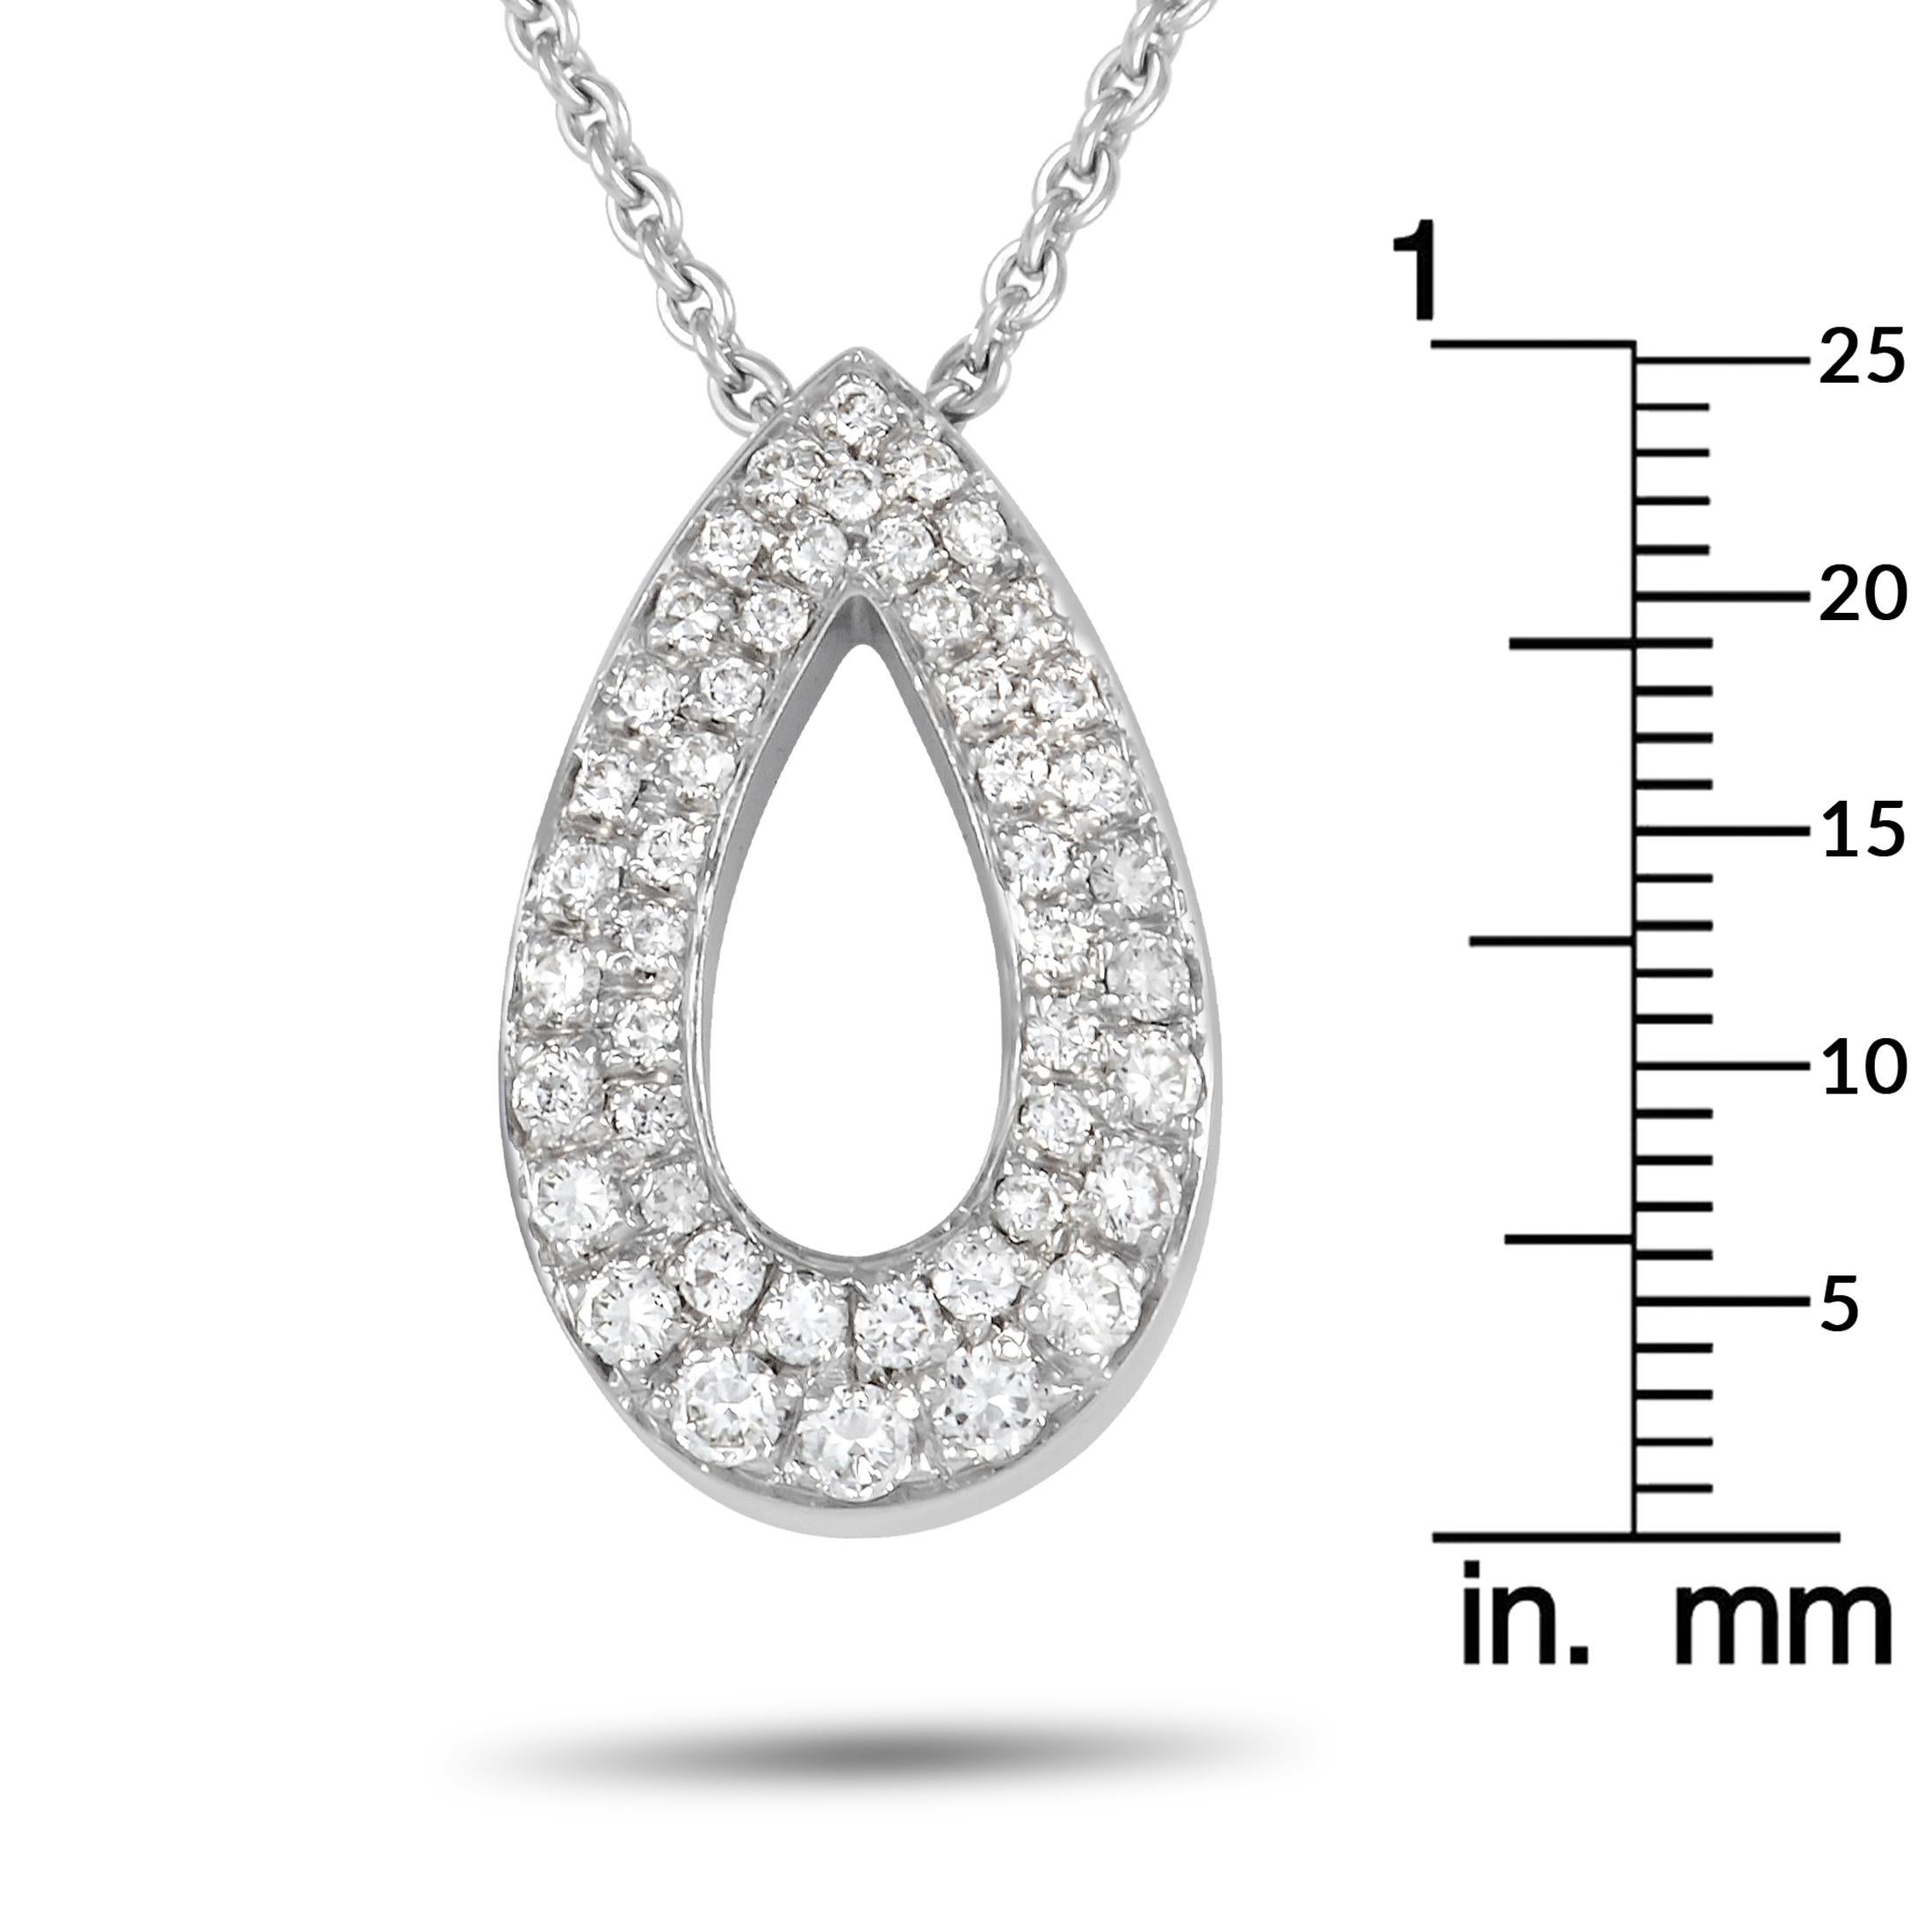 Women's Piaget 18K White Gold 0.85 Ct Diamond Pendant Necklace